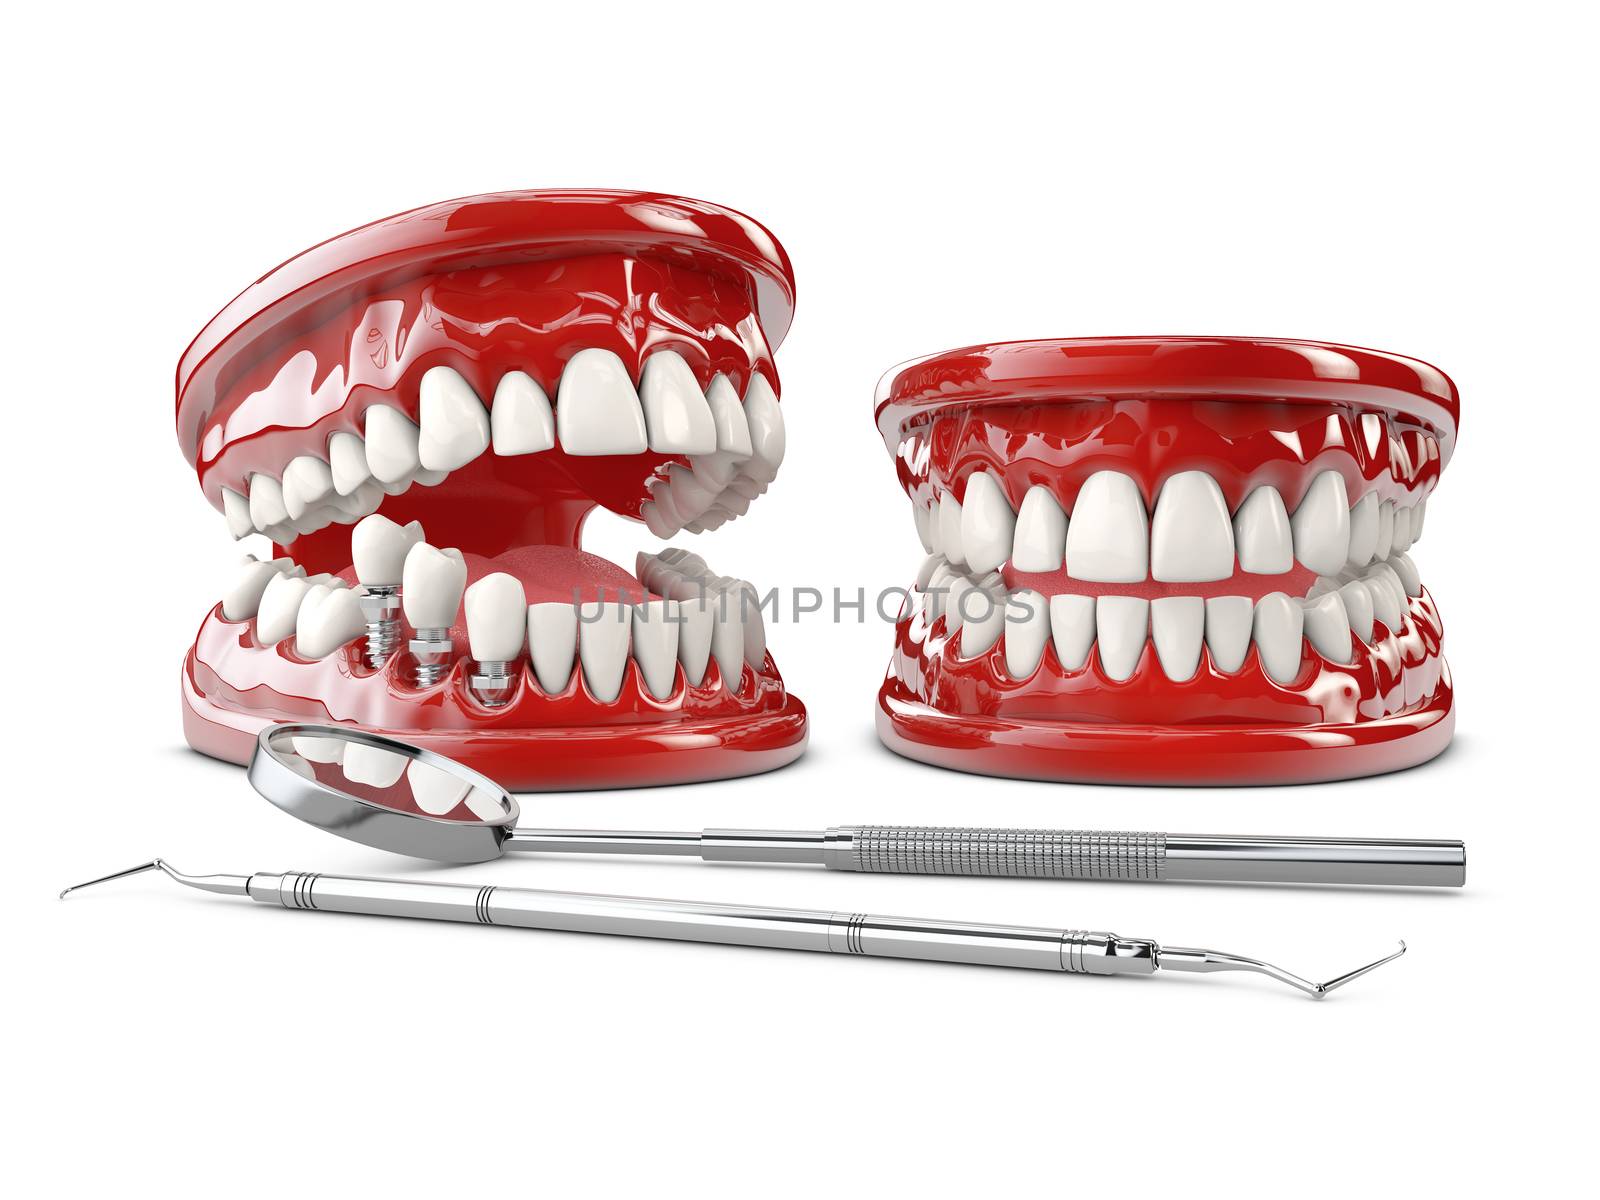 Tooth human implant. Dental concept 3d illustration.